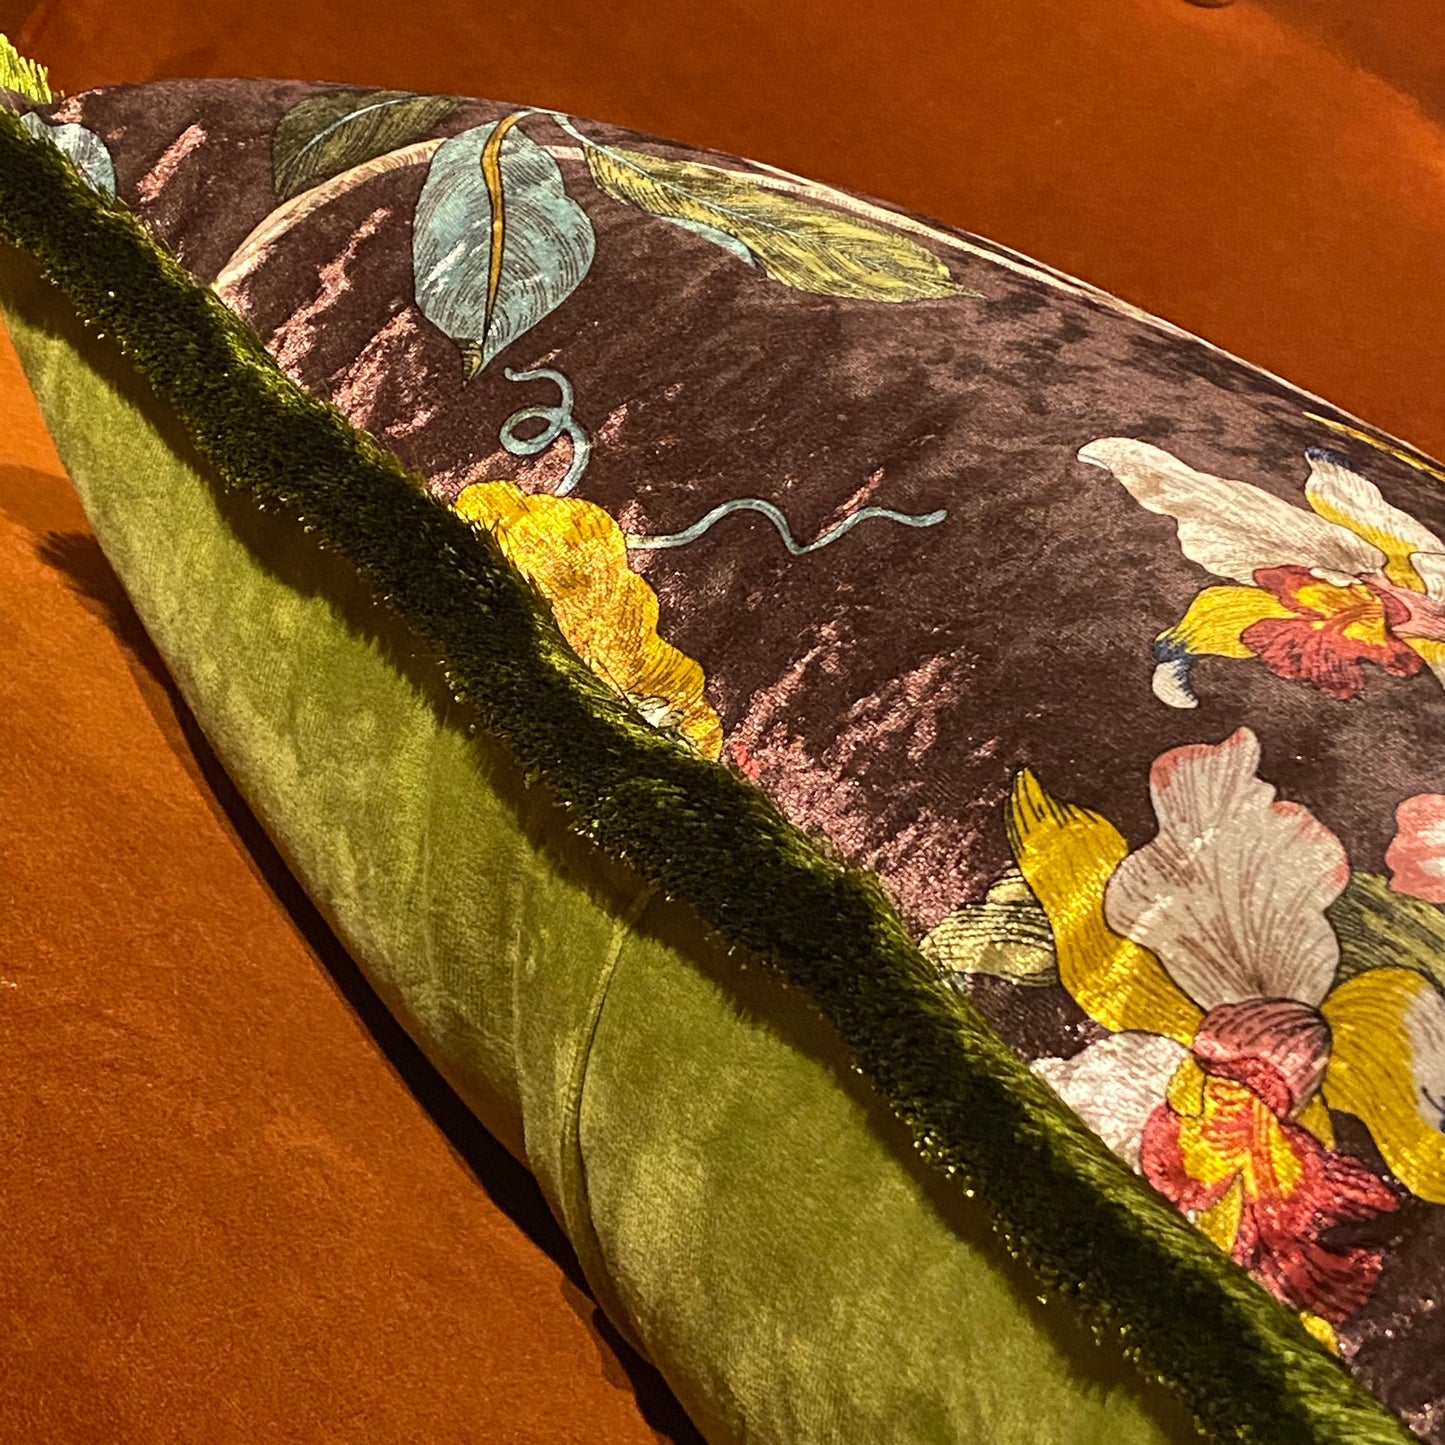 Italy Shiny Velvet Floral Hummingbird Pillow Case, 50X50cm